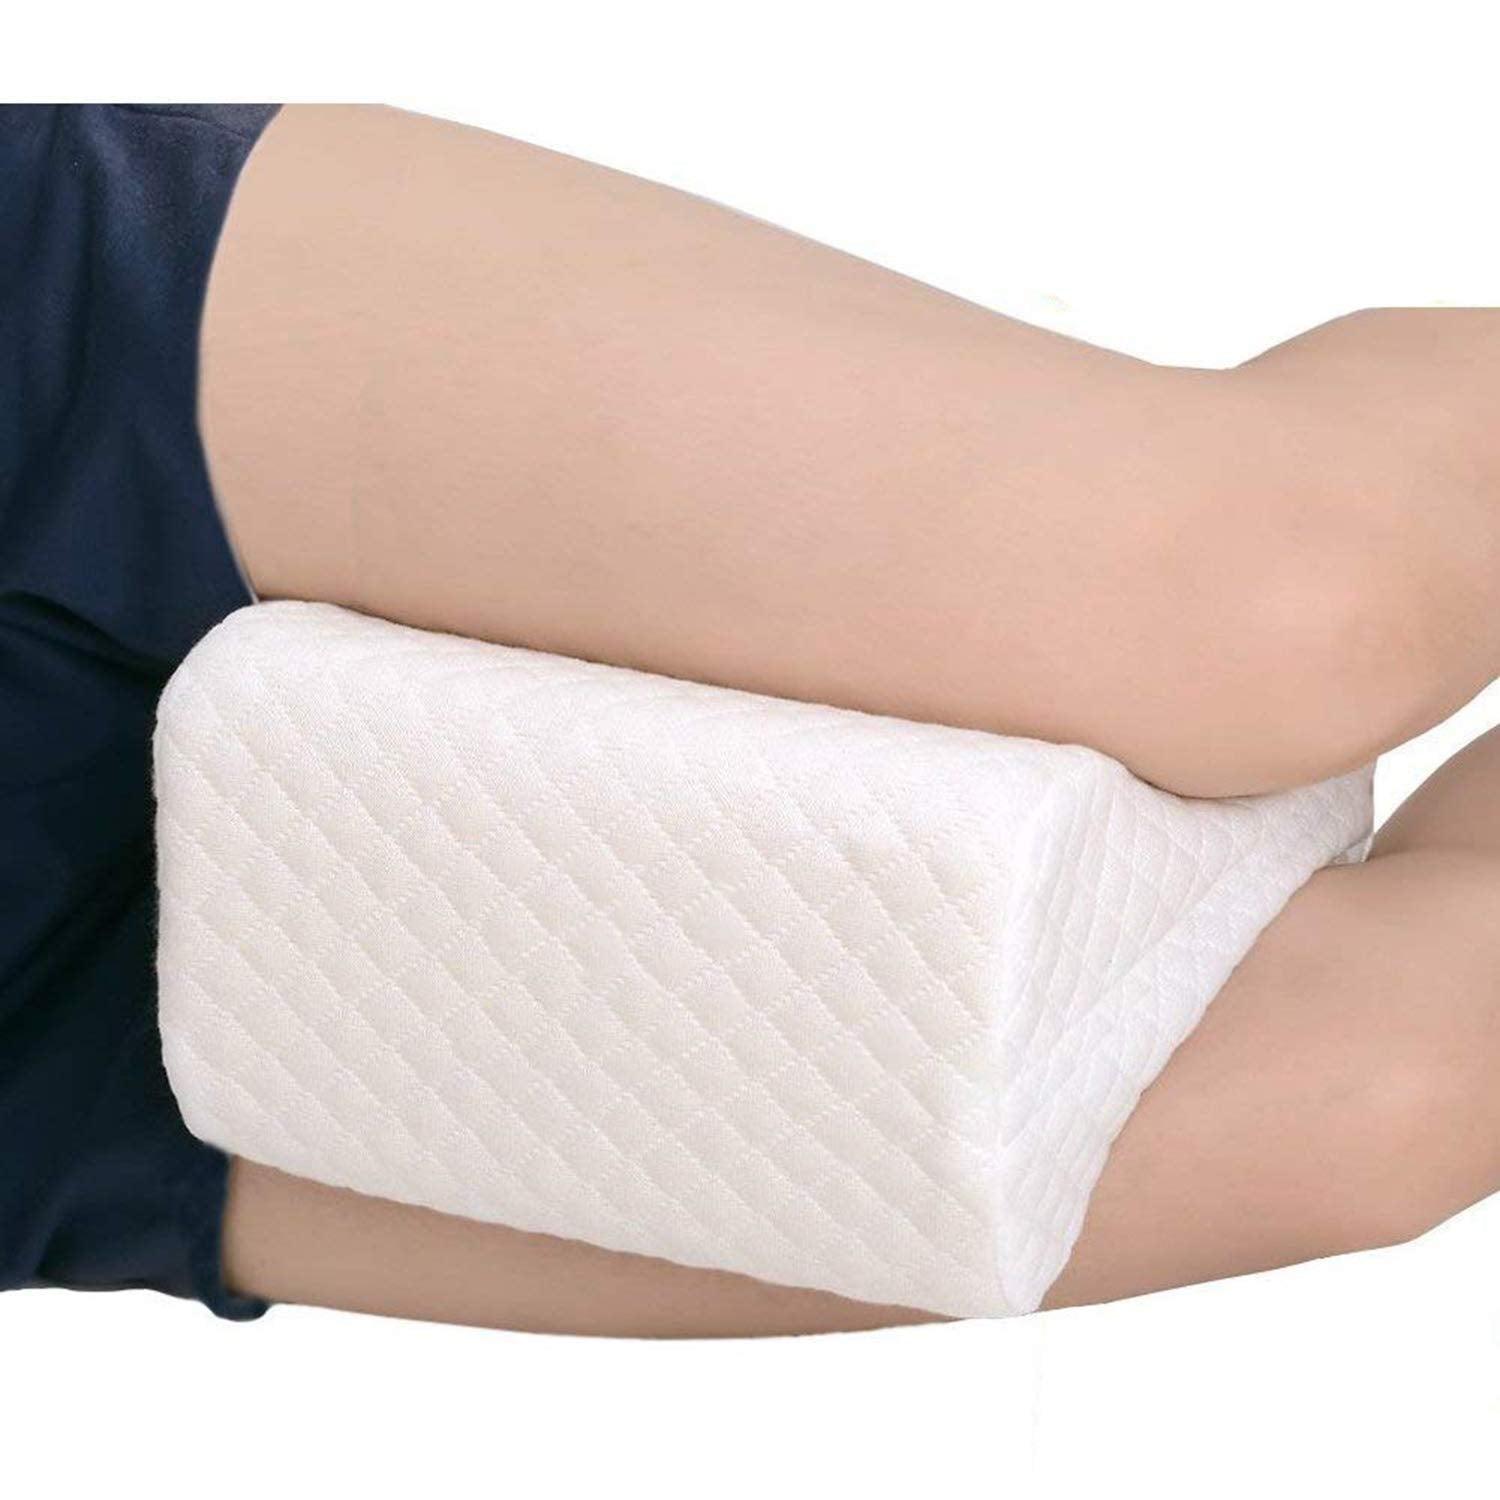 VIO Memory Foam Knee Pillow Orthopedic Leg Pillow Designed for Side Sleepers,Leg,Pregnancy,Back, Hip Pain Relief-Comfortable Pillow (White)